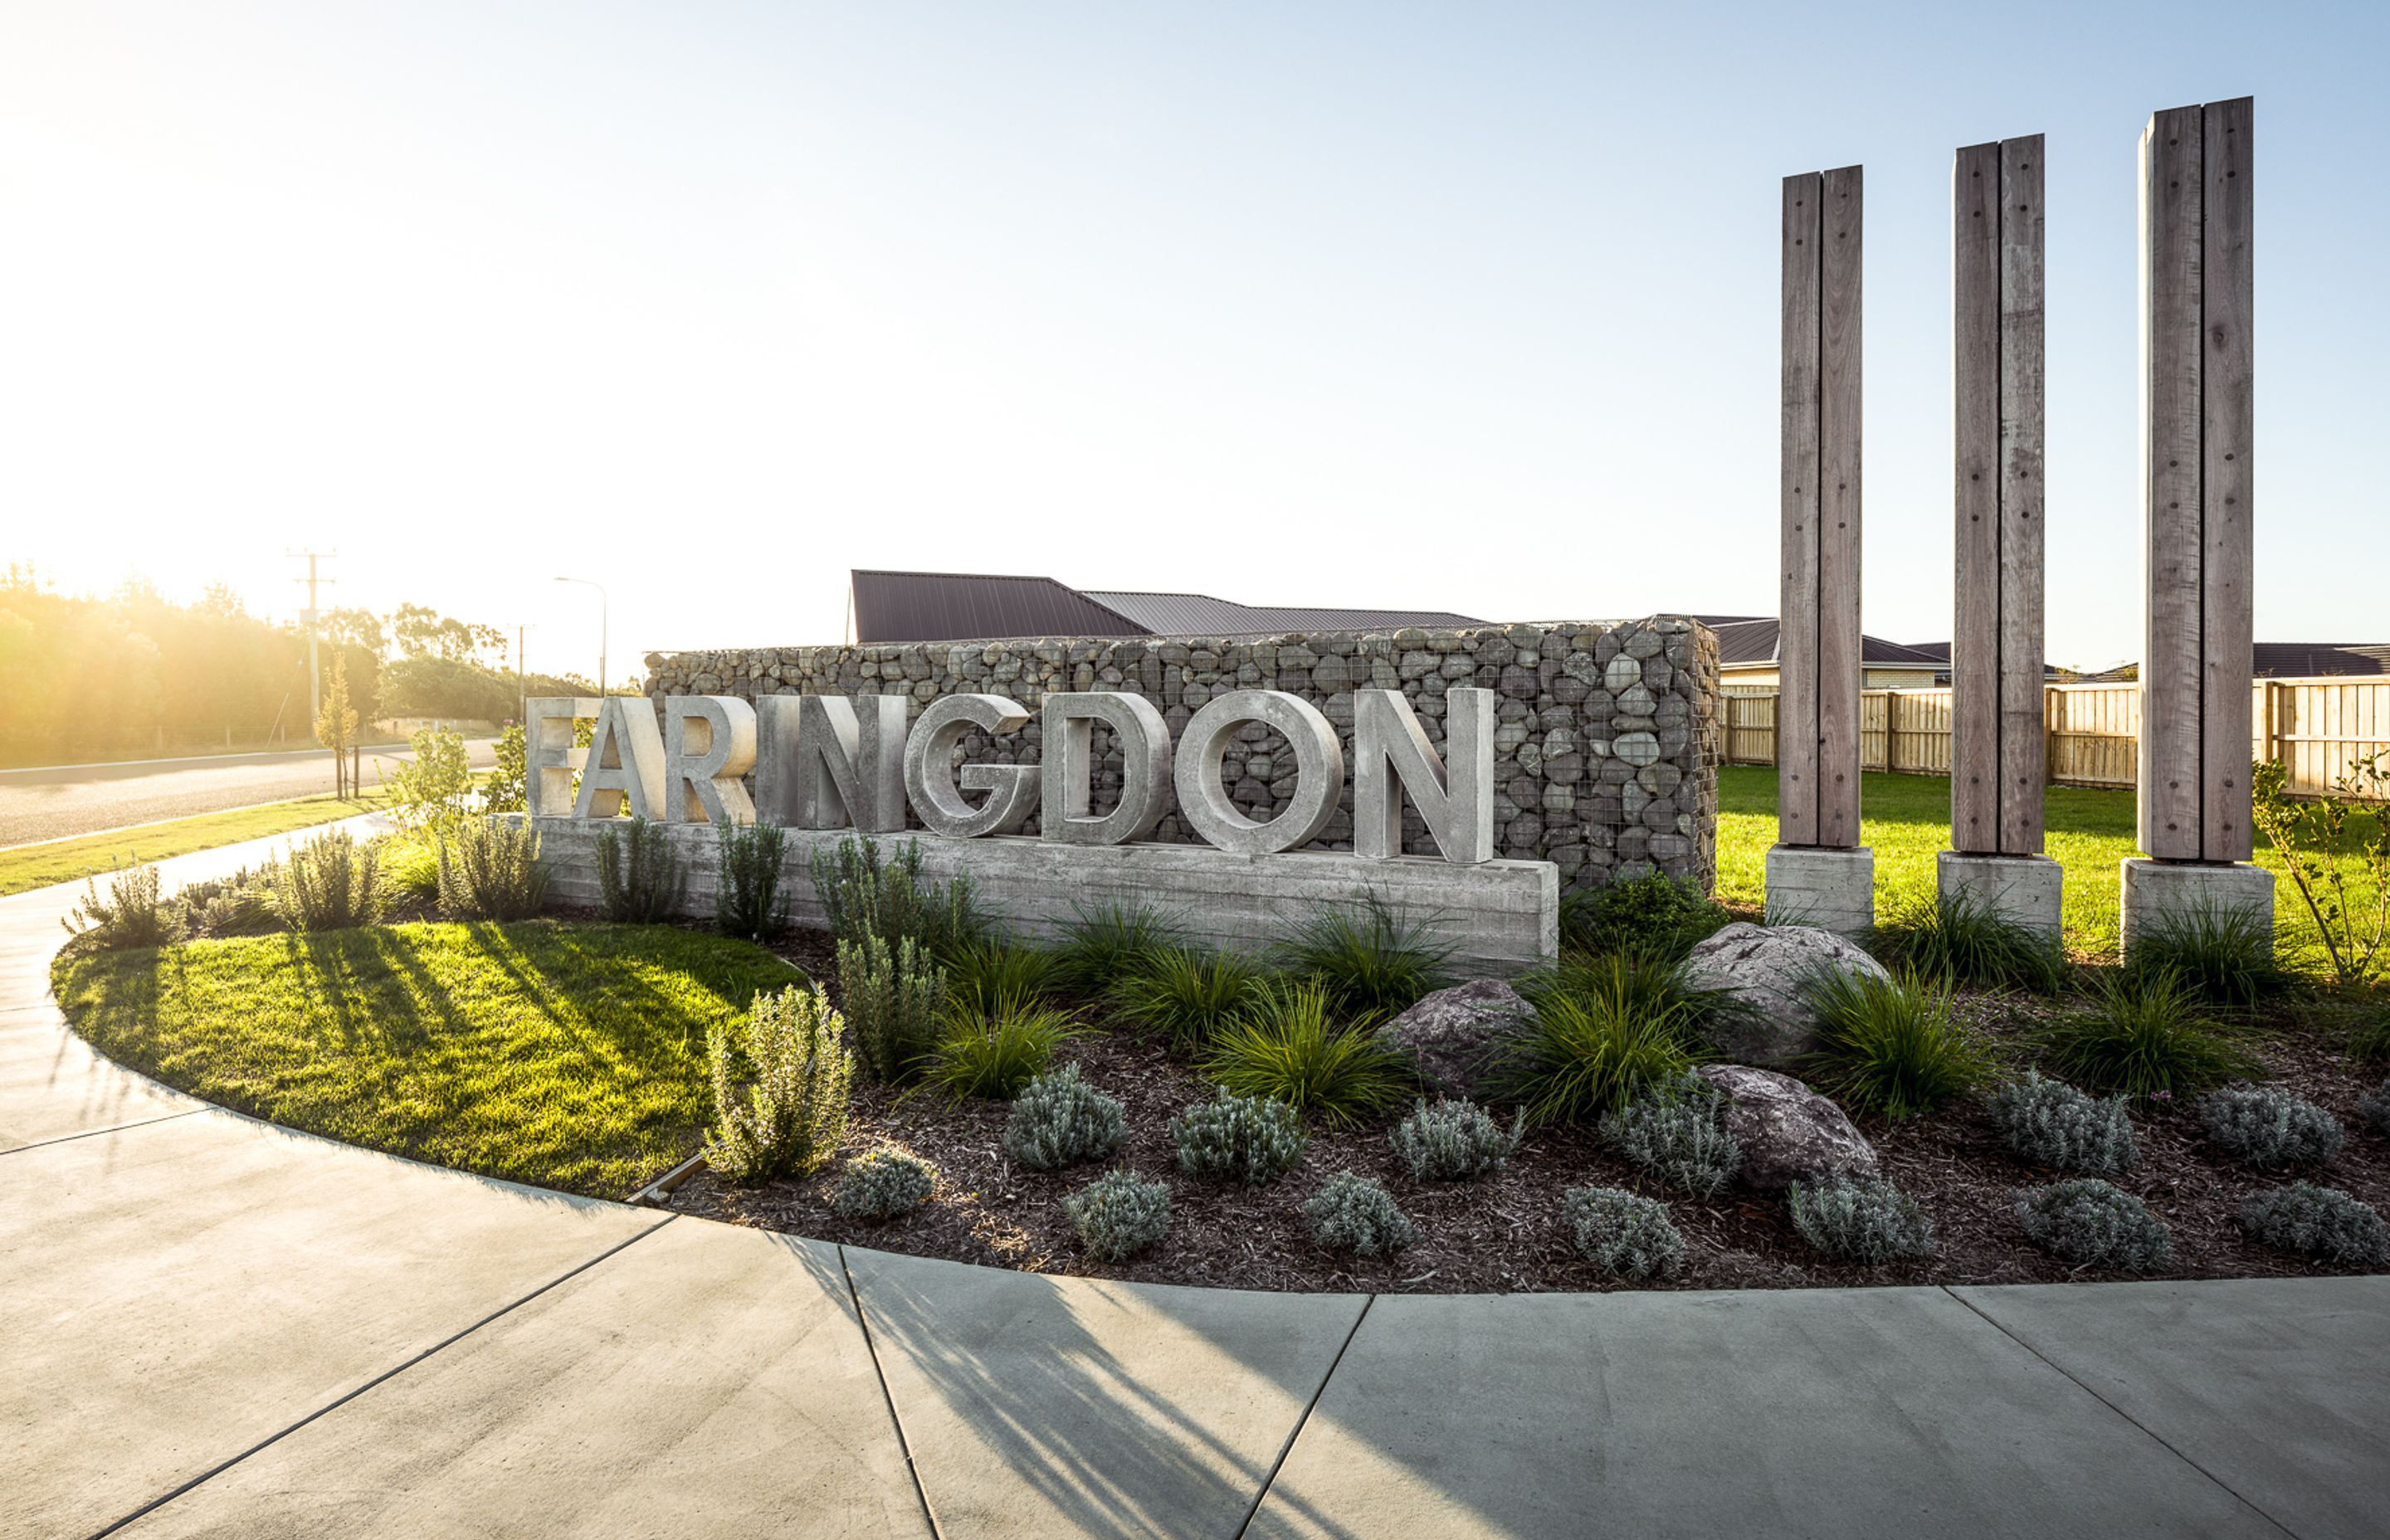 Faringdon<br />For Morgan + Pollard, Design by Kamo Marsh Landscape Architects